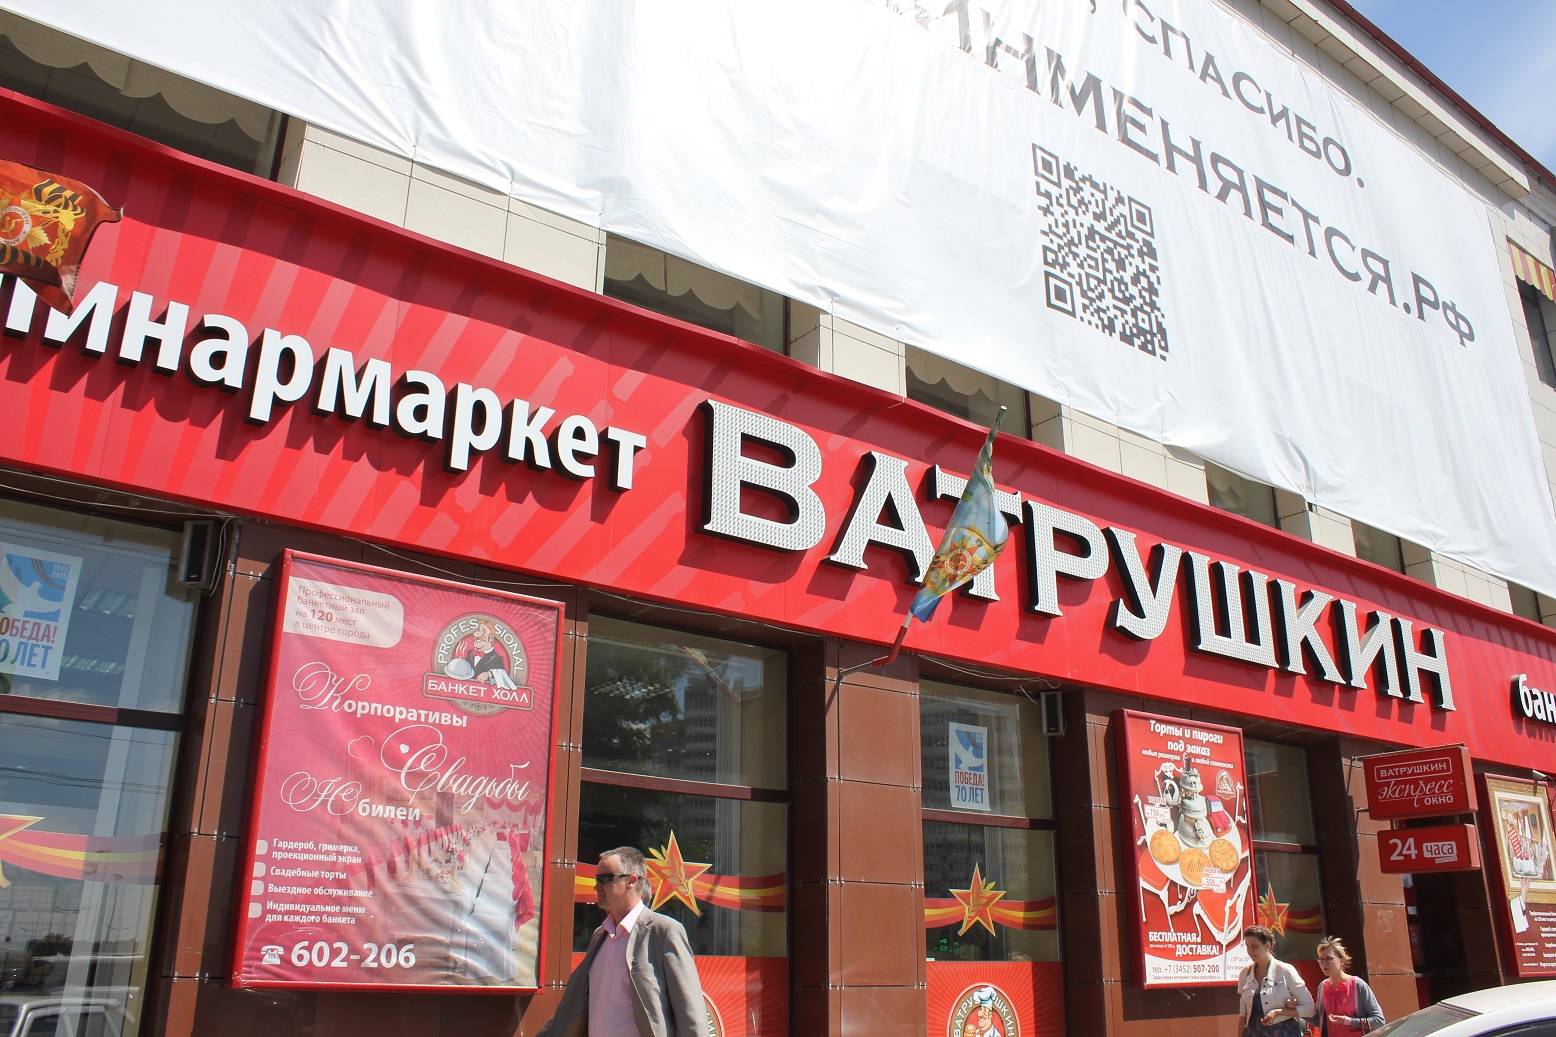 В Тюмени после проверки Ревизорро закрыли кафе Ватрушкин - 17 июня 2015